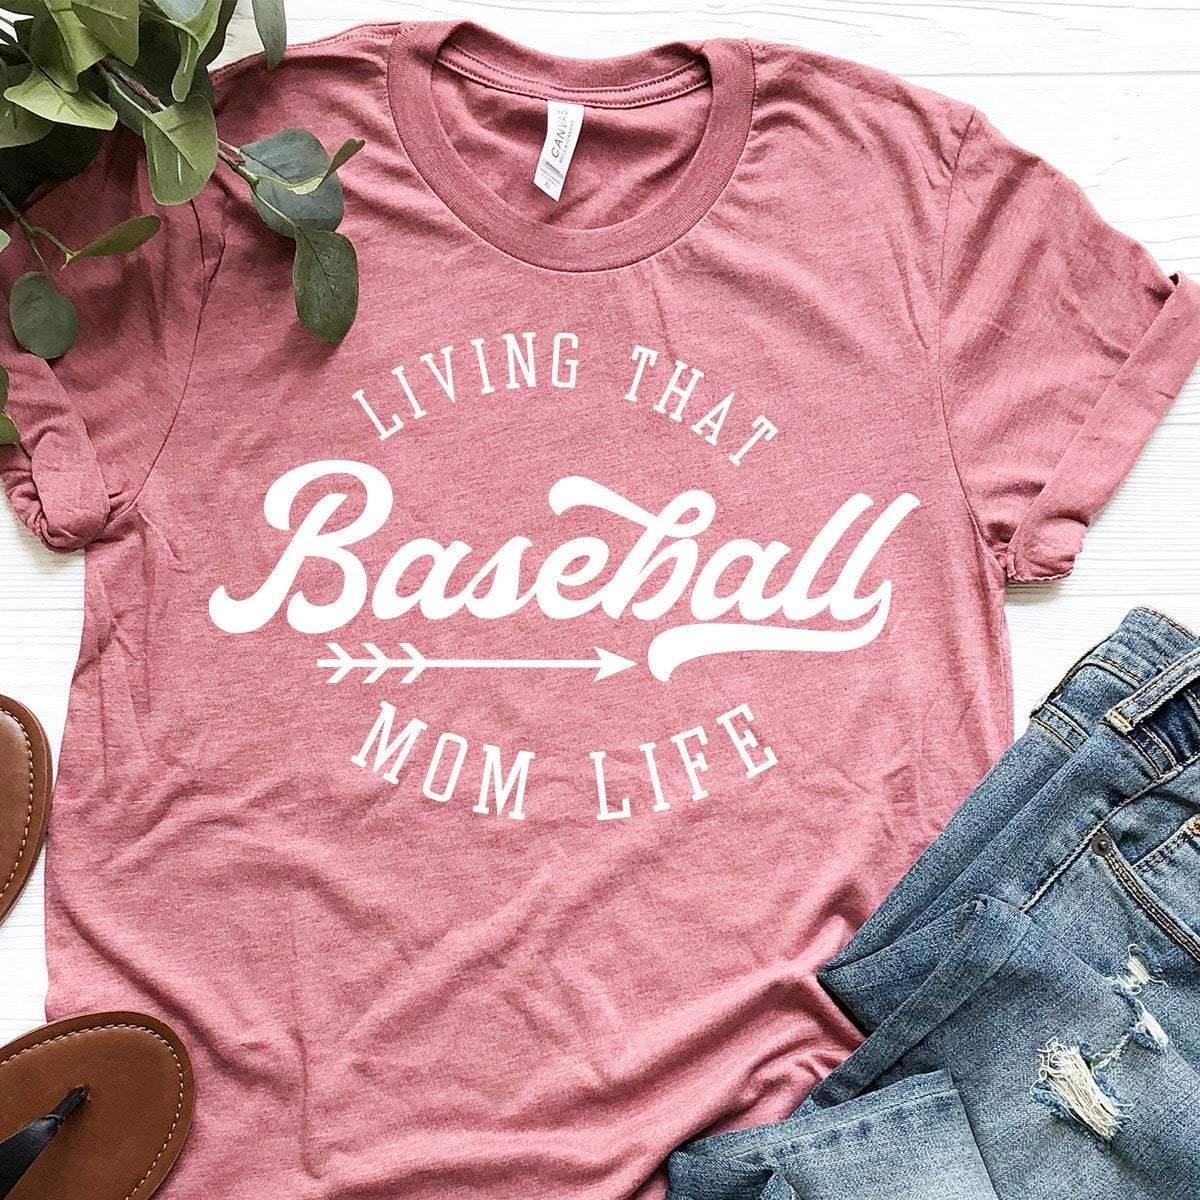 Don't Be A Basic Pitch Shirt Baseball Mom Shirts -   Womens baseball  shirt, Weird shirts, Baseball fan shirts